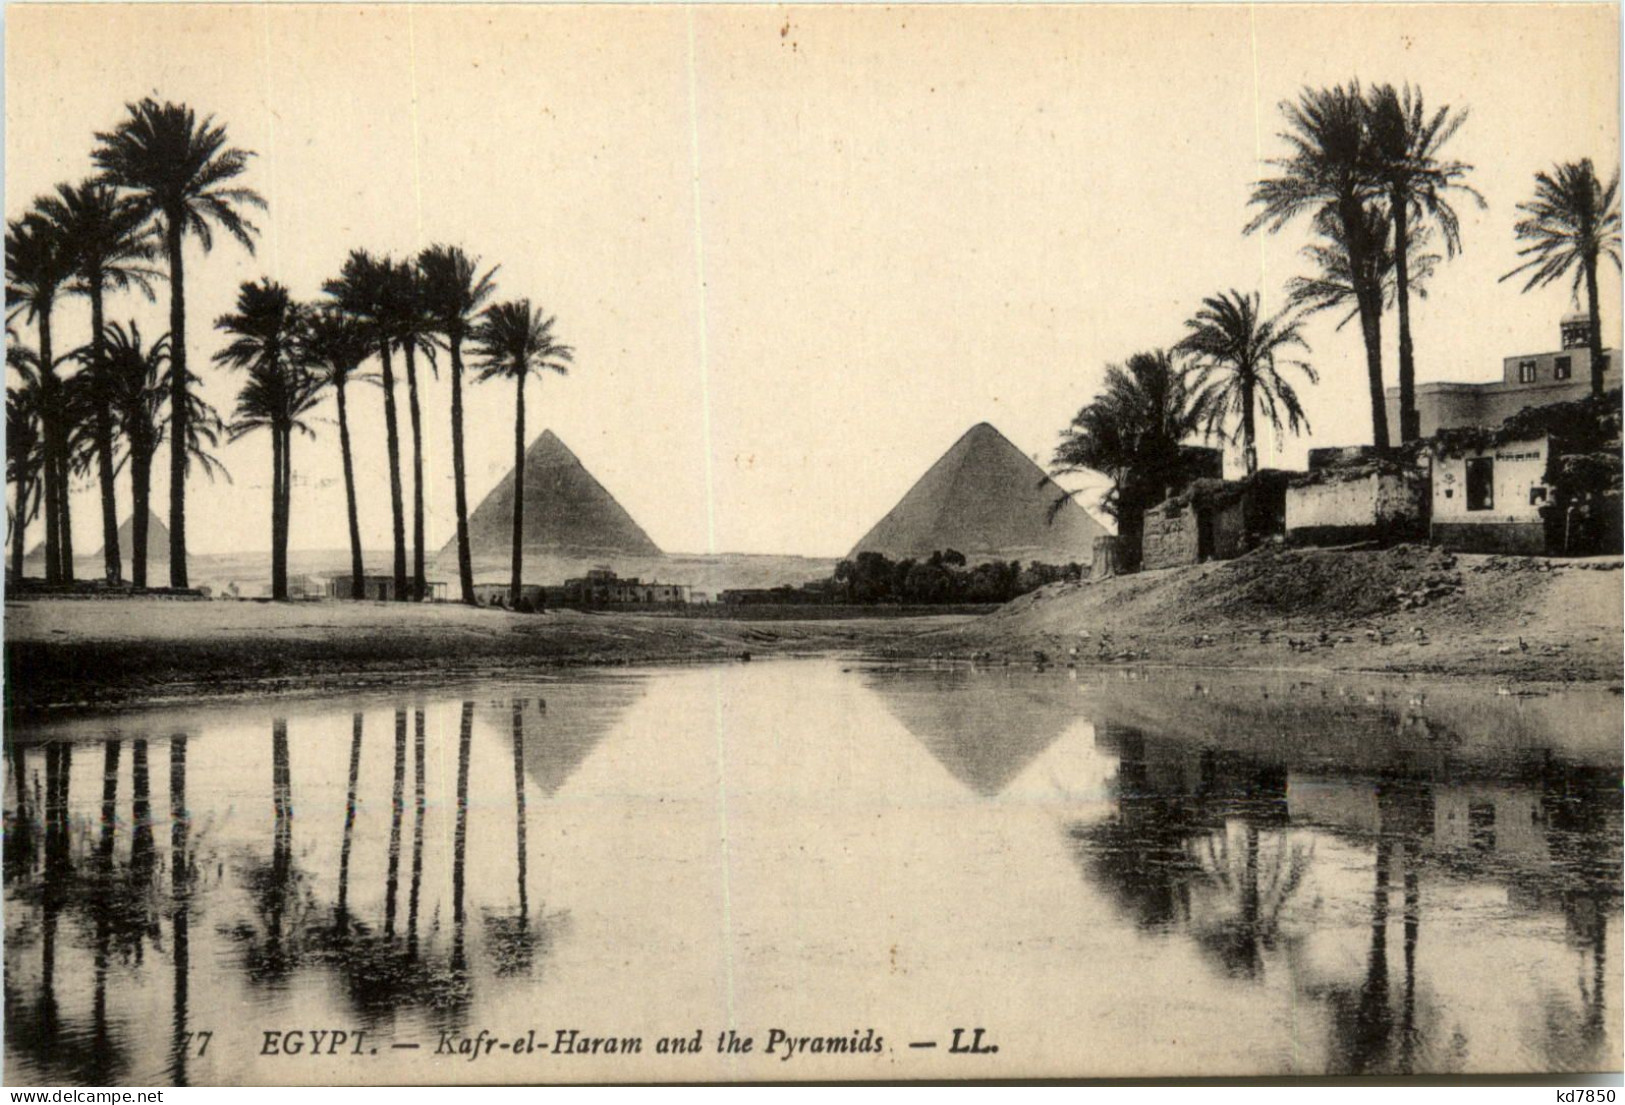 Cairo - Pyramids - Pyramids